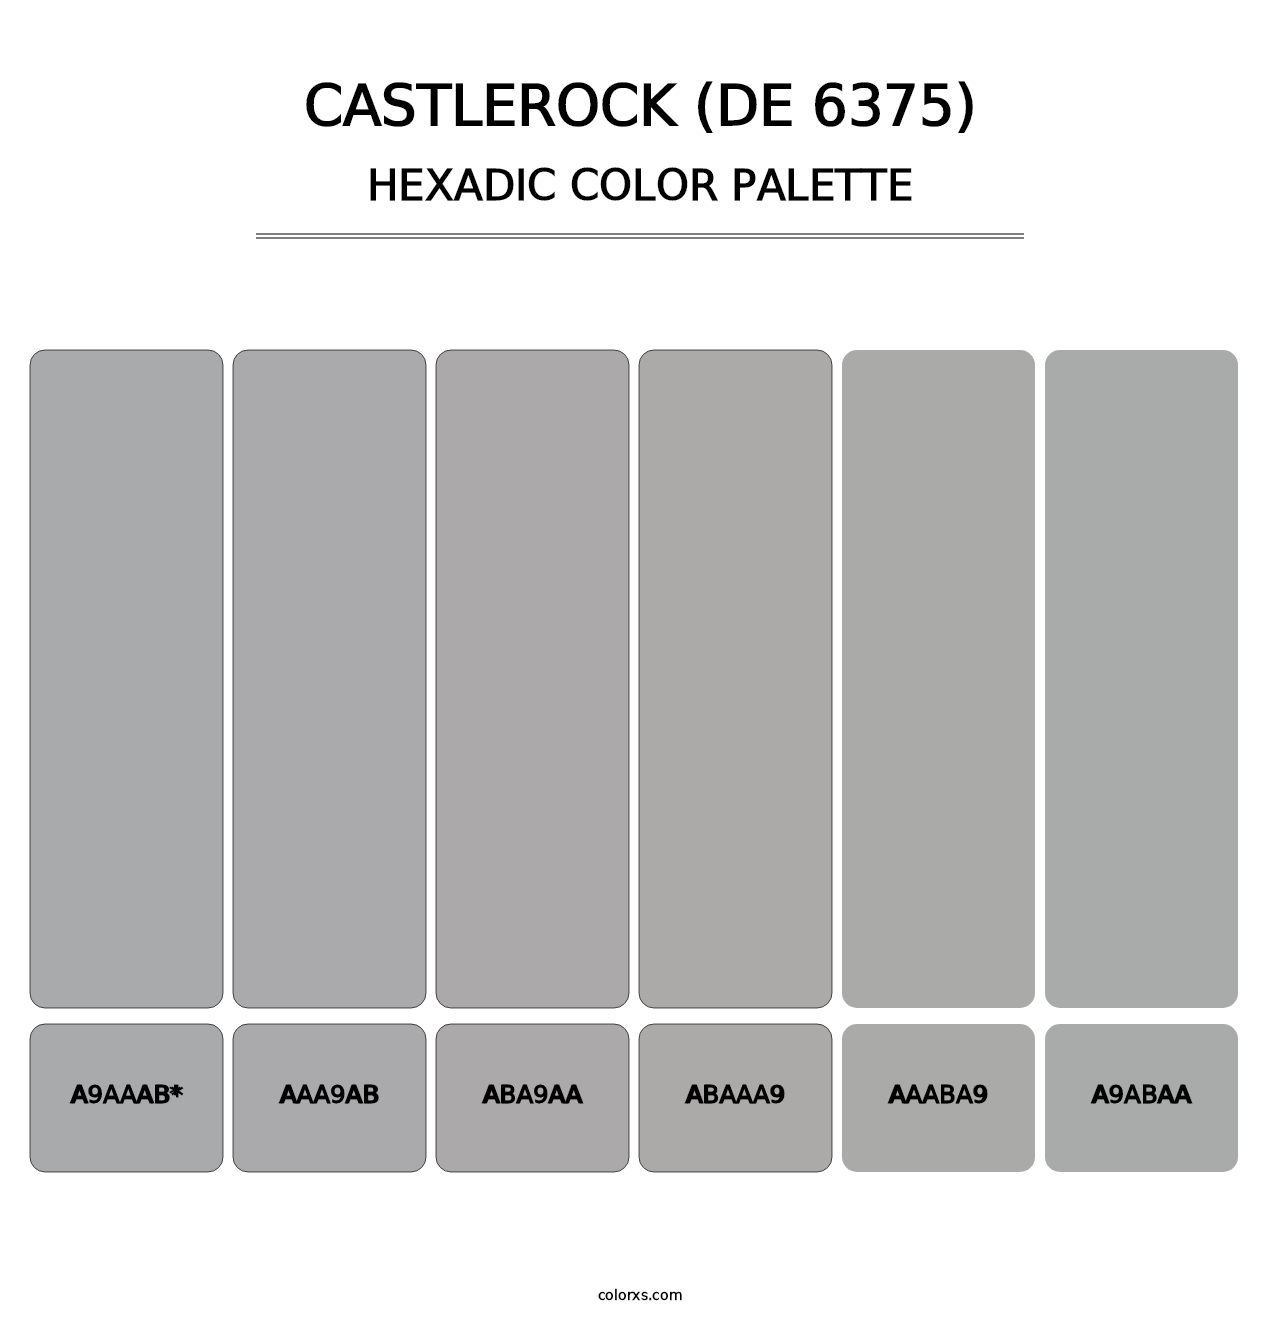 Castlerock (DE 6375) - Hexadic Color Palette